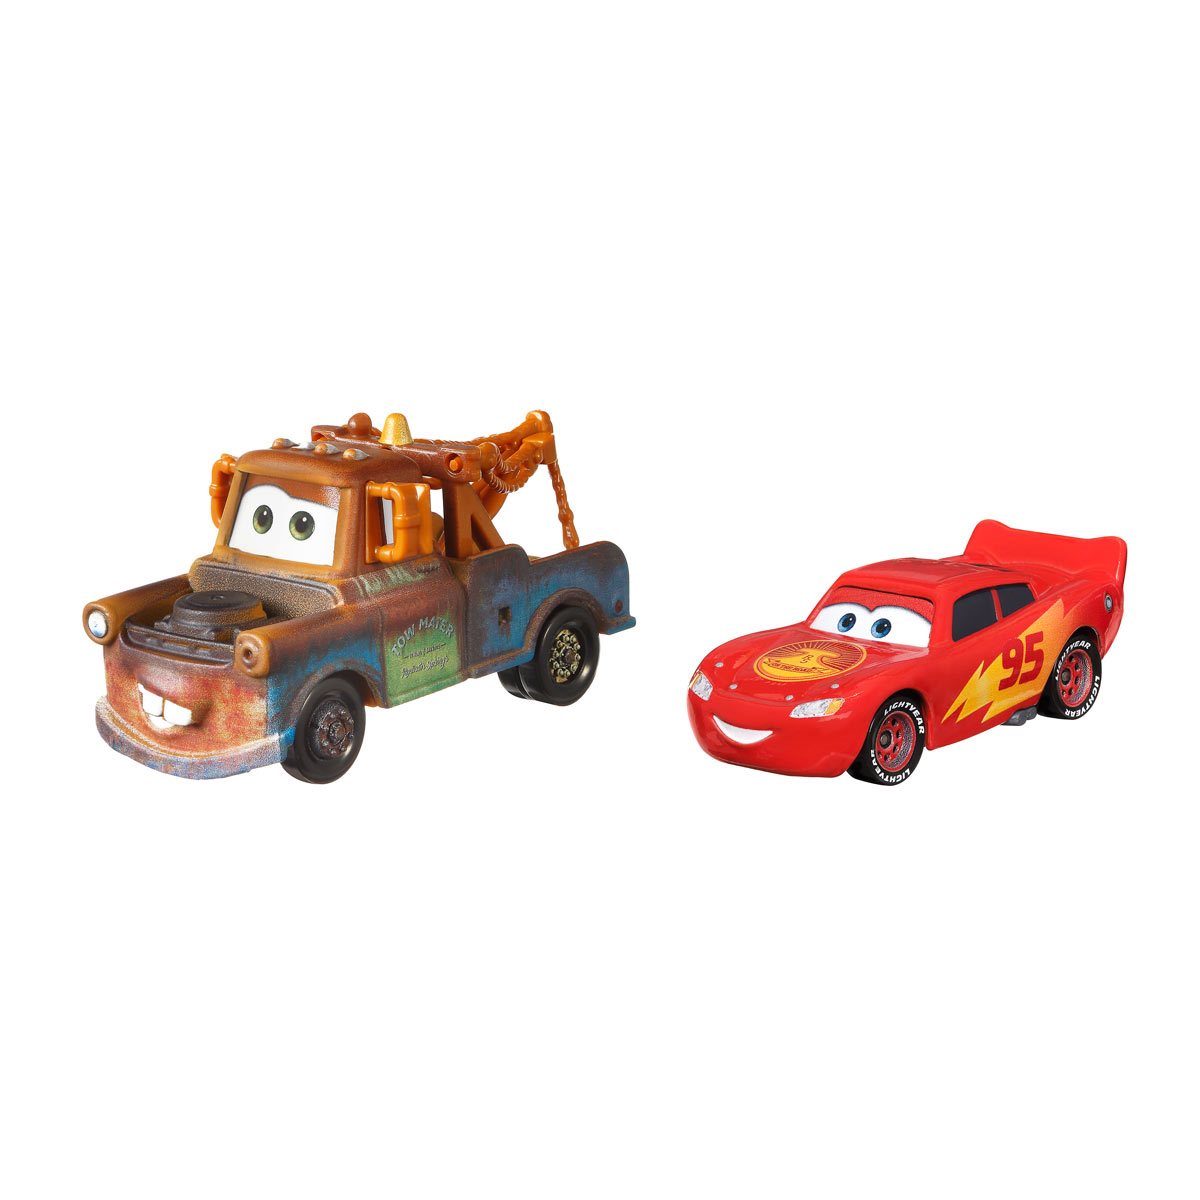 Disney Pixar Cars 3 - Lightning McQueen & Mater Vehicle 2pk